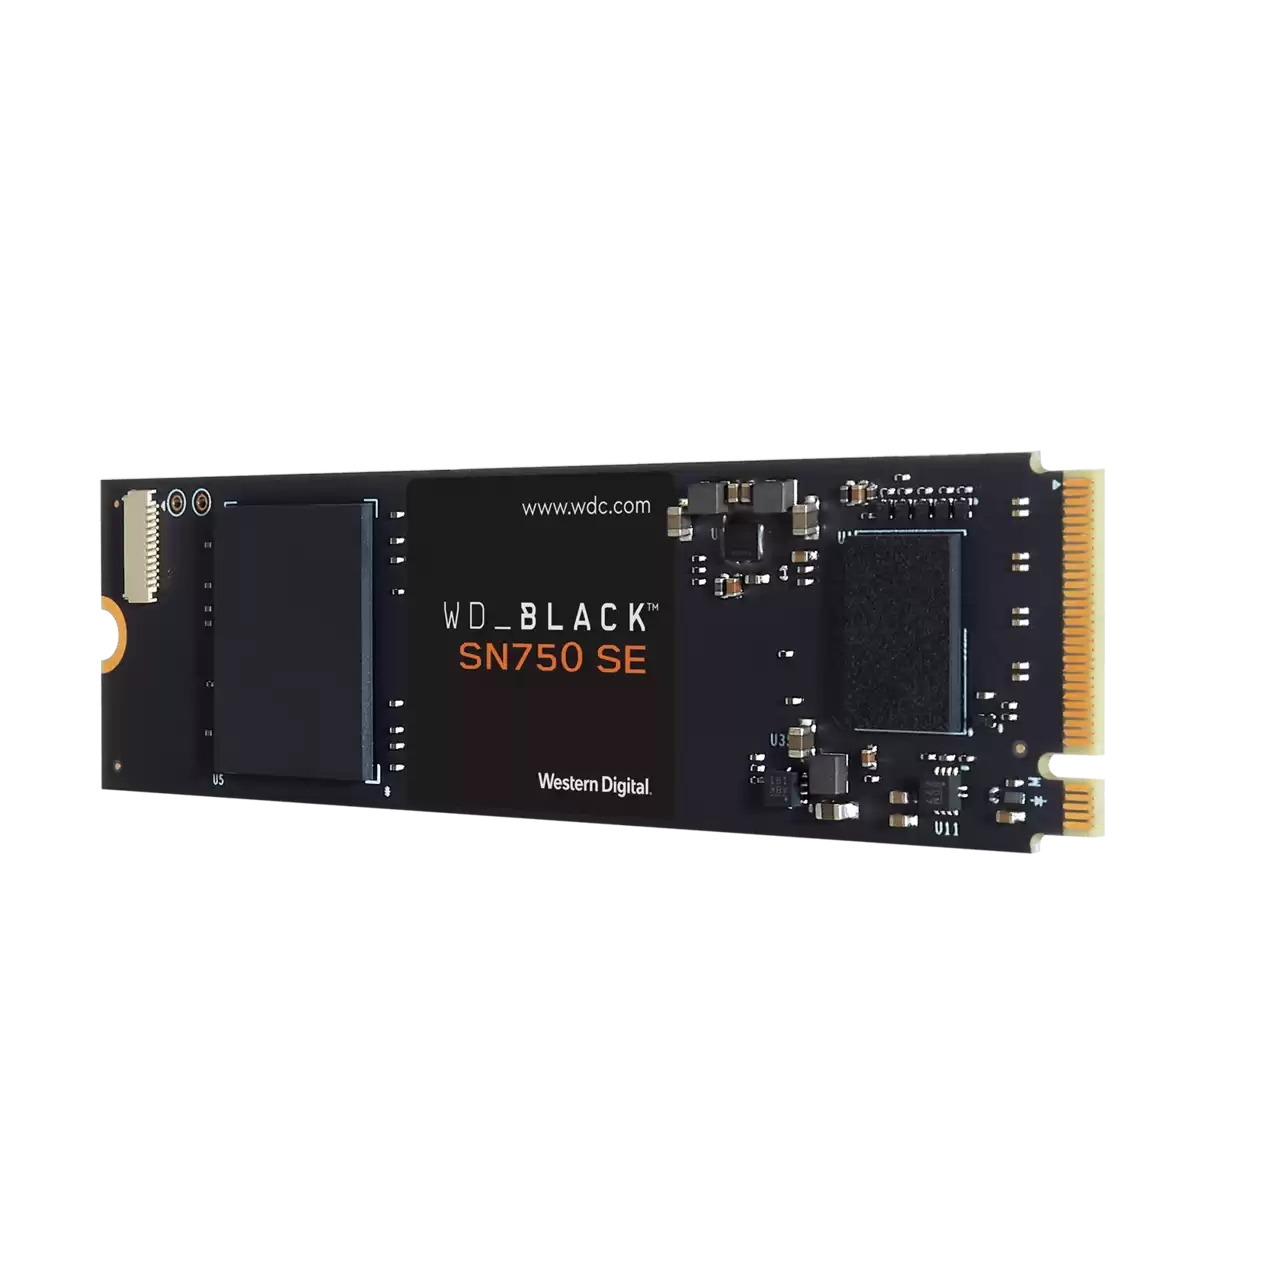 WD WD_Black SN750 SE High-Performance NVMe M.2 interne Gaming SSD 500